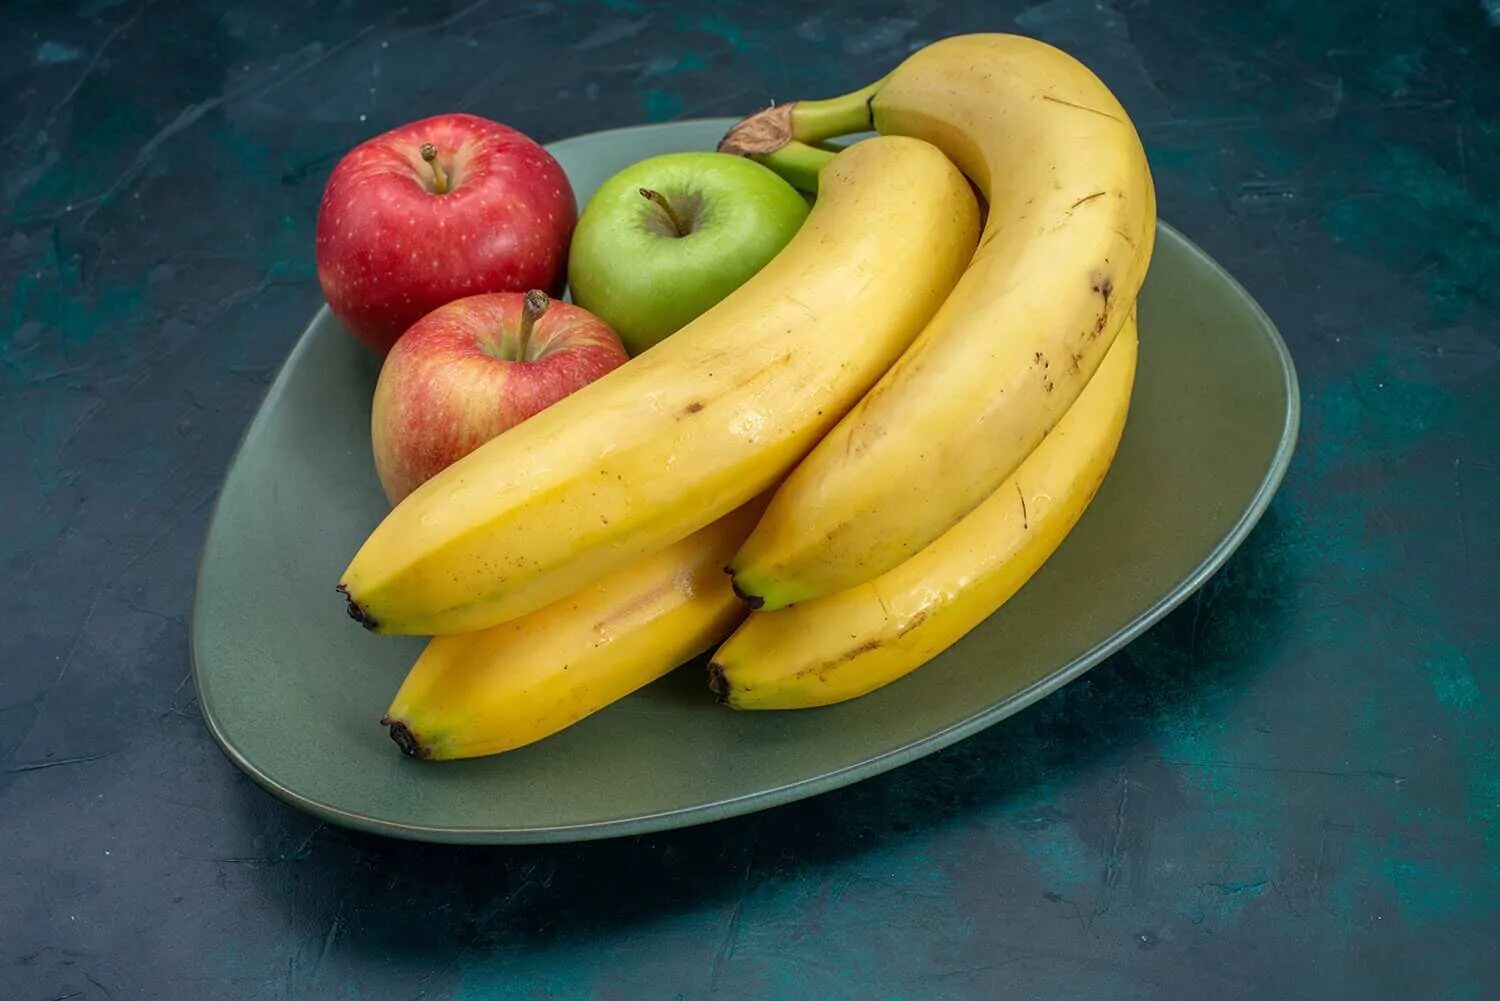 I like bananas apples. Яблоки и бананы. Фрукты бананы яблоки. Яблочные бананы. Банан на столе.